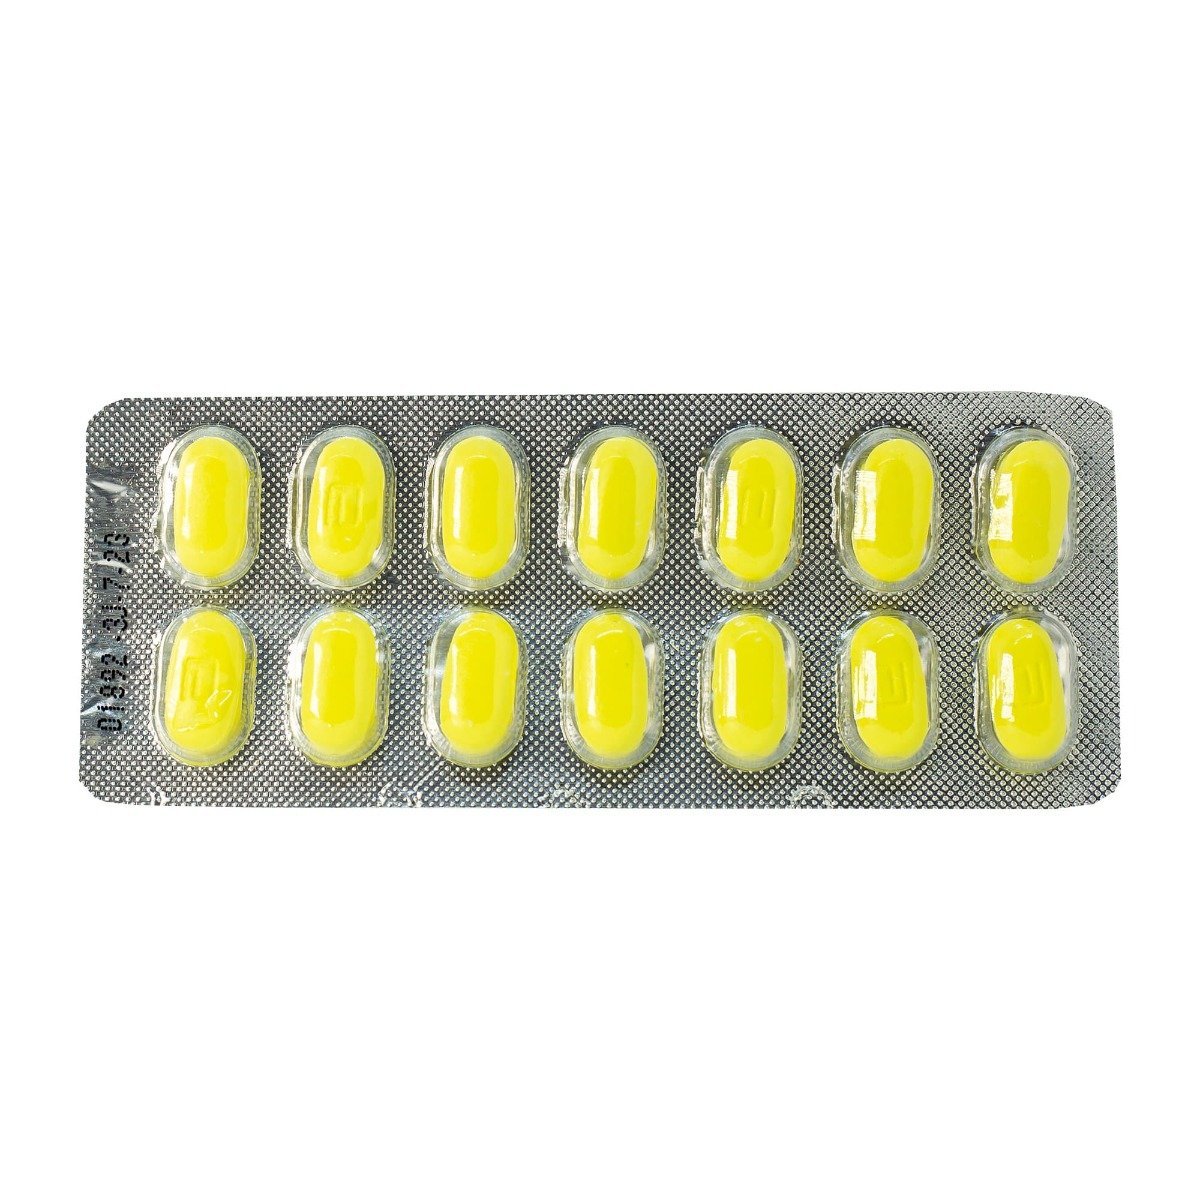 Klacid 500 mg - 14 Tablets - Bloom Pharmacy